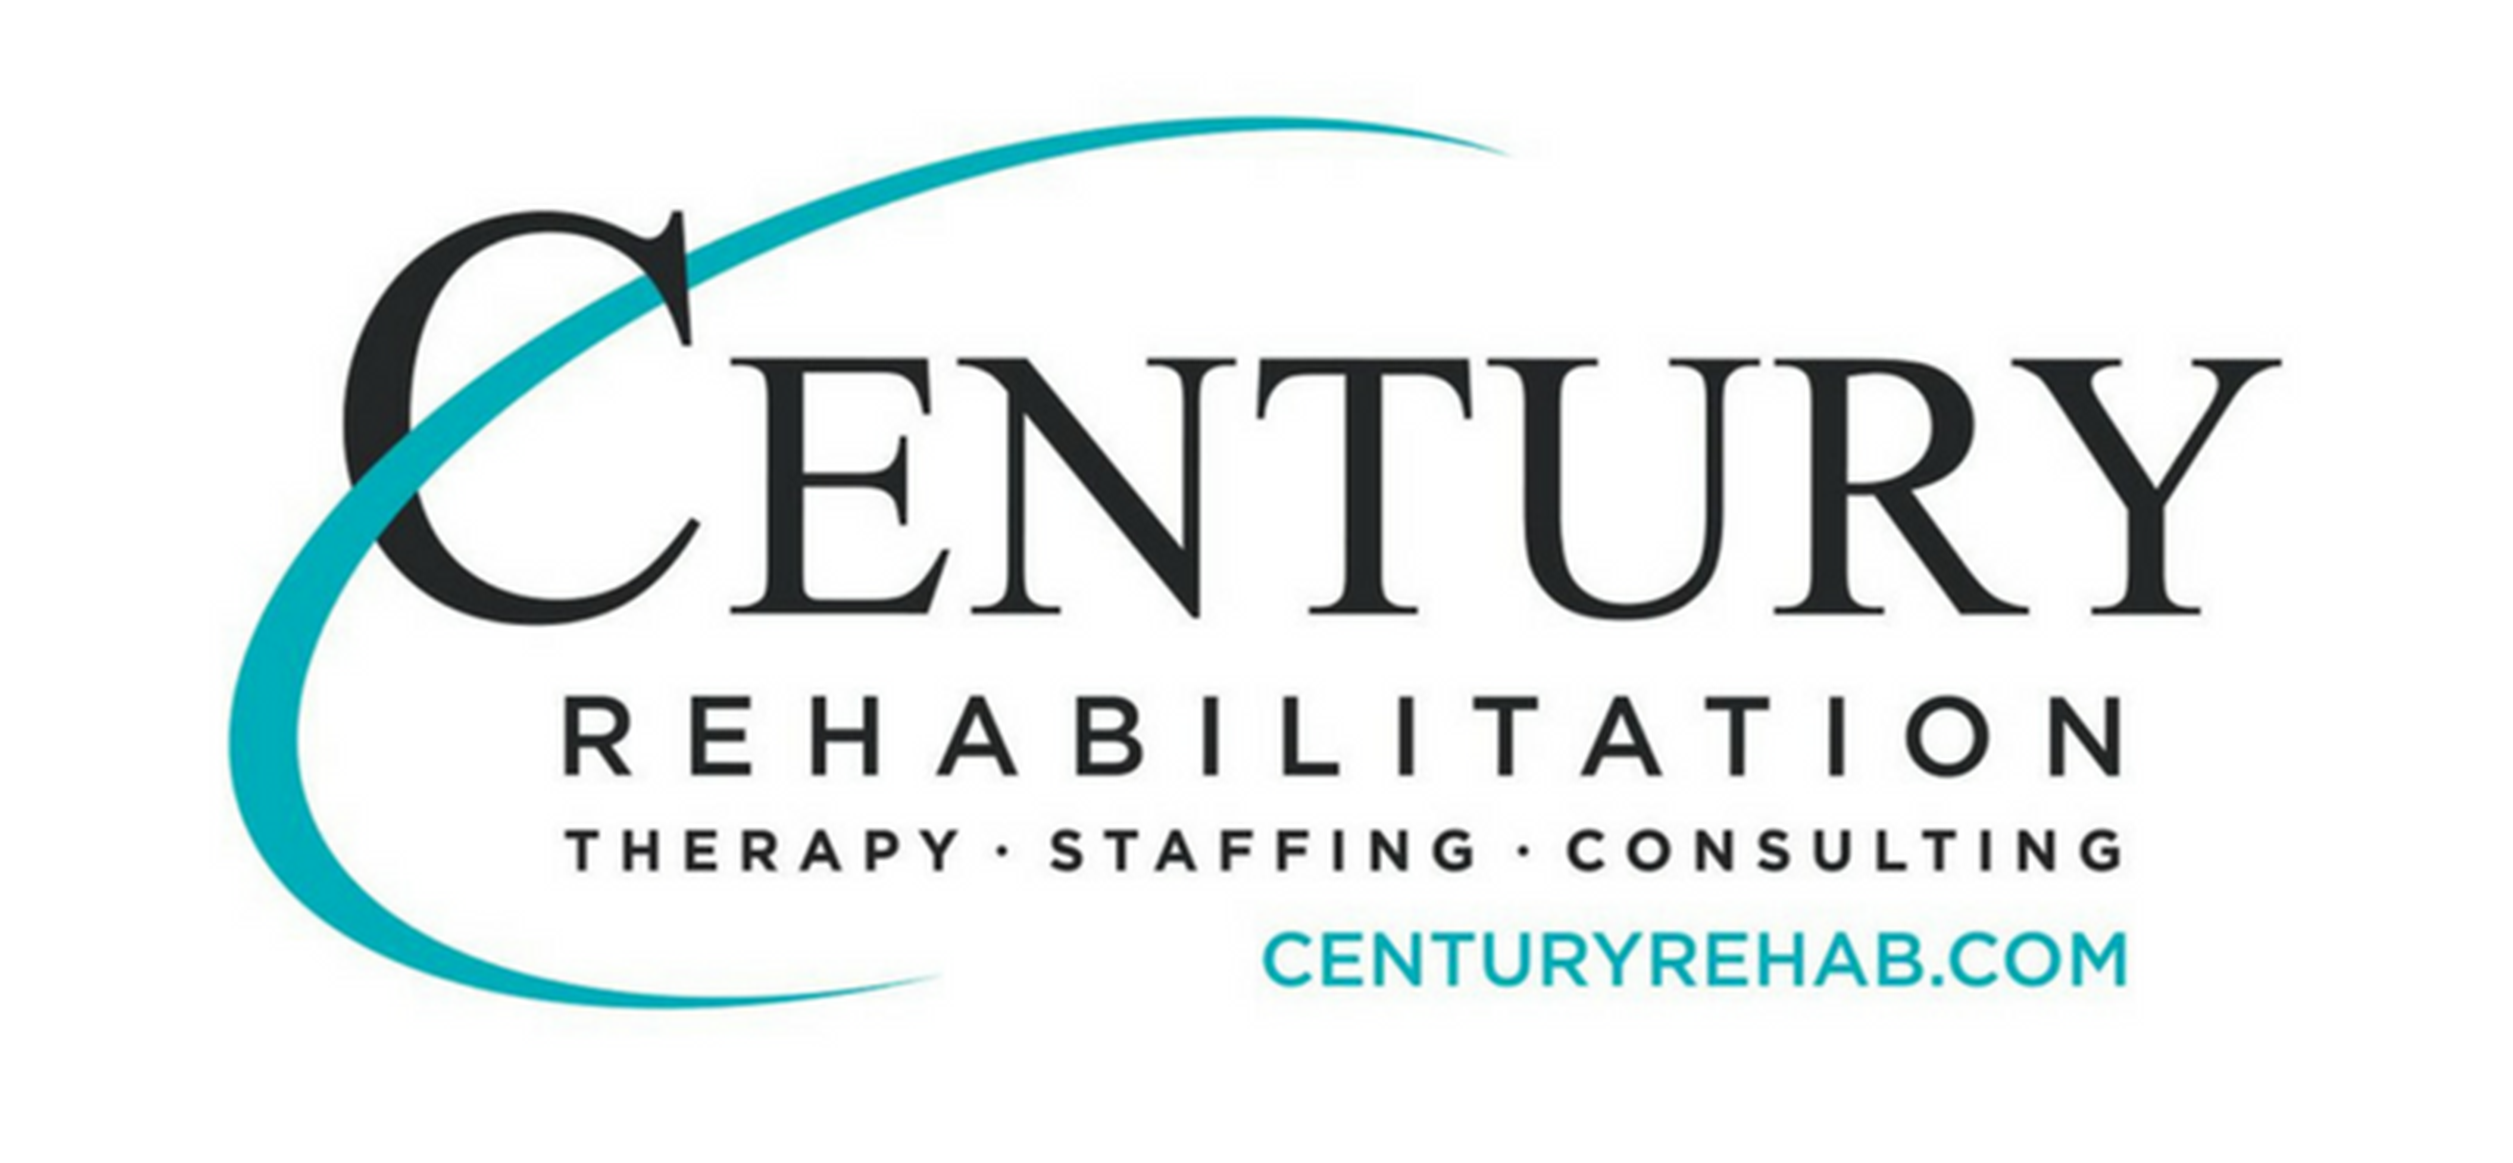 century rehab logo